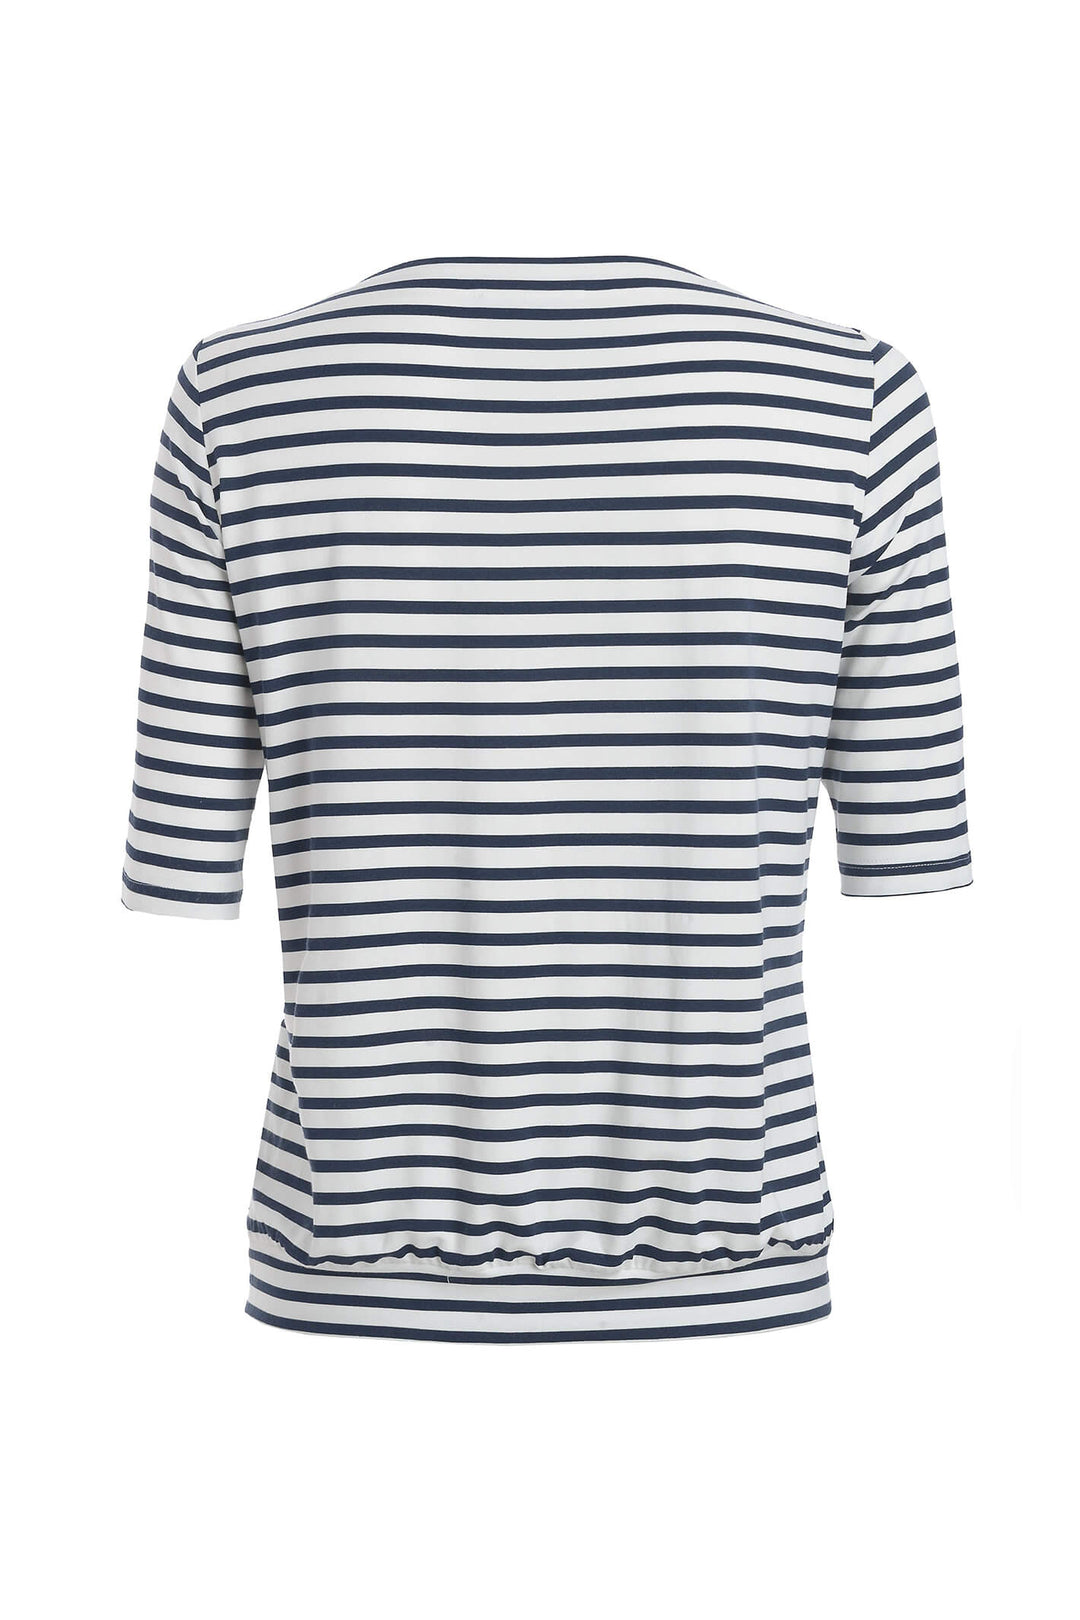 Frank Walder 710.402 528041 Navy Stripe T-shirt